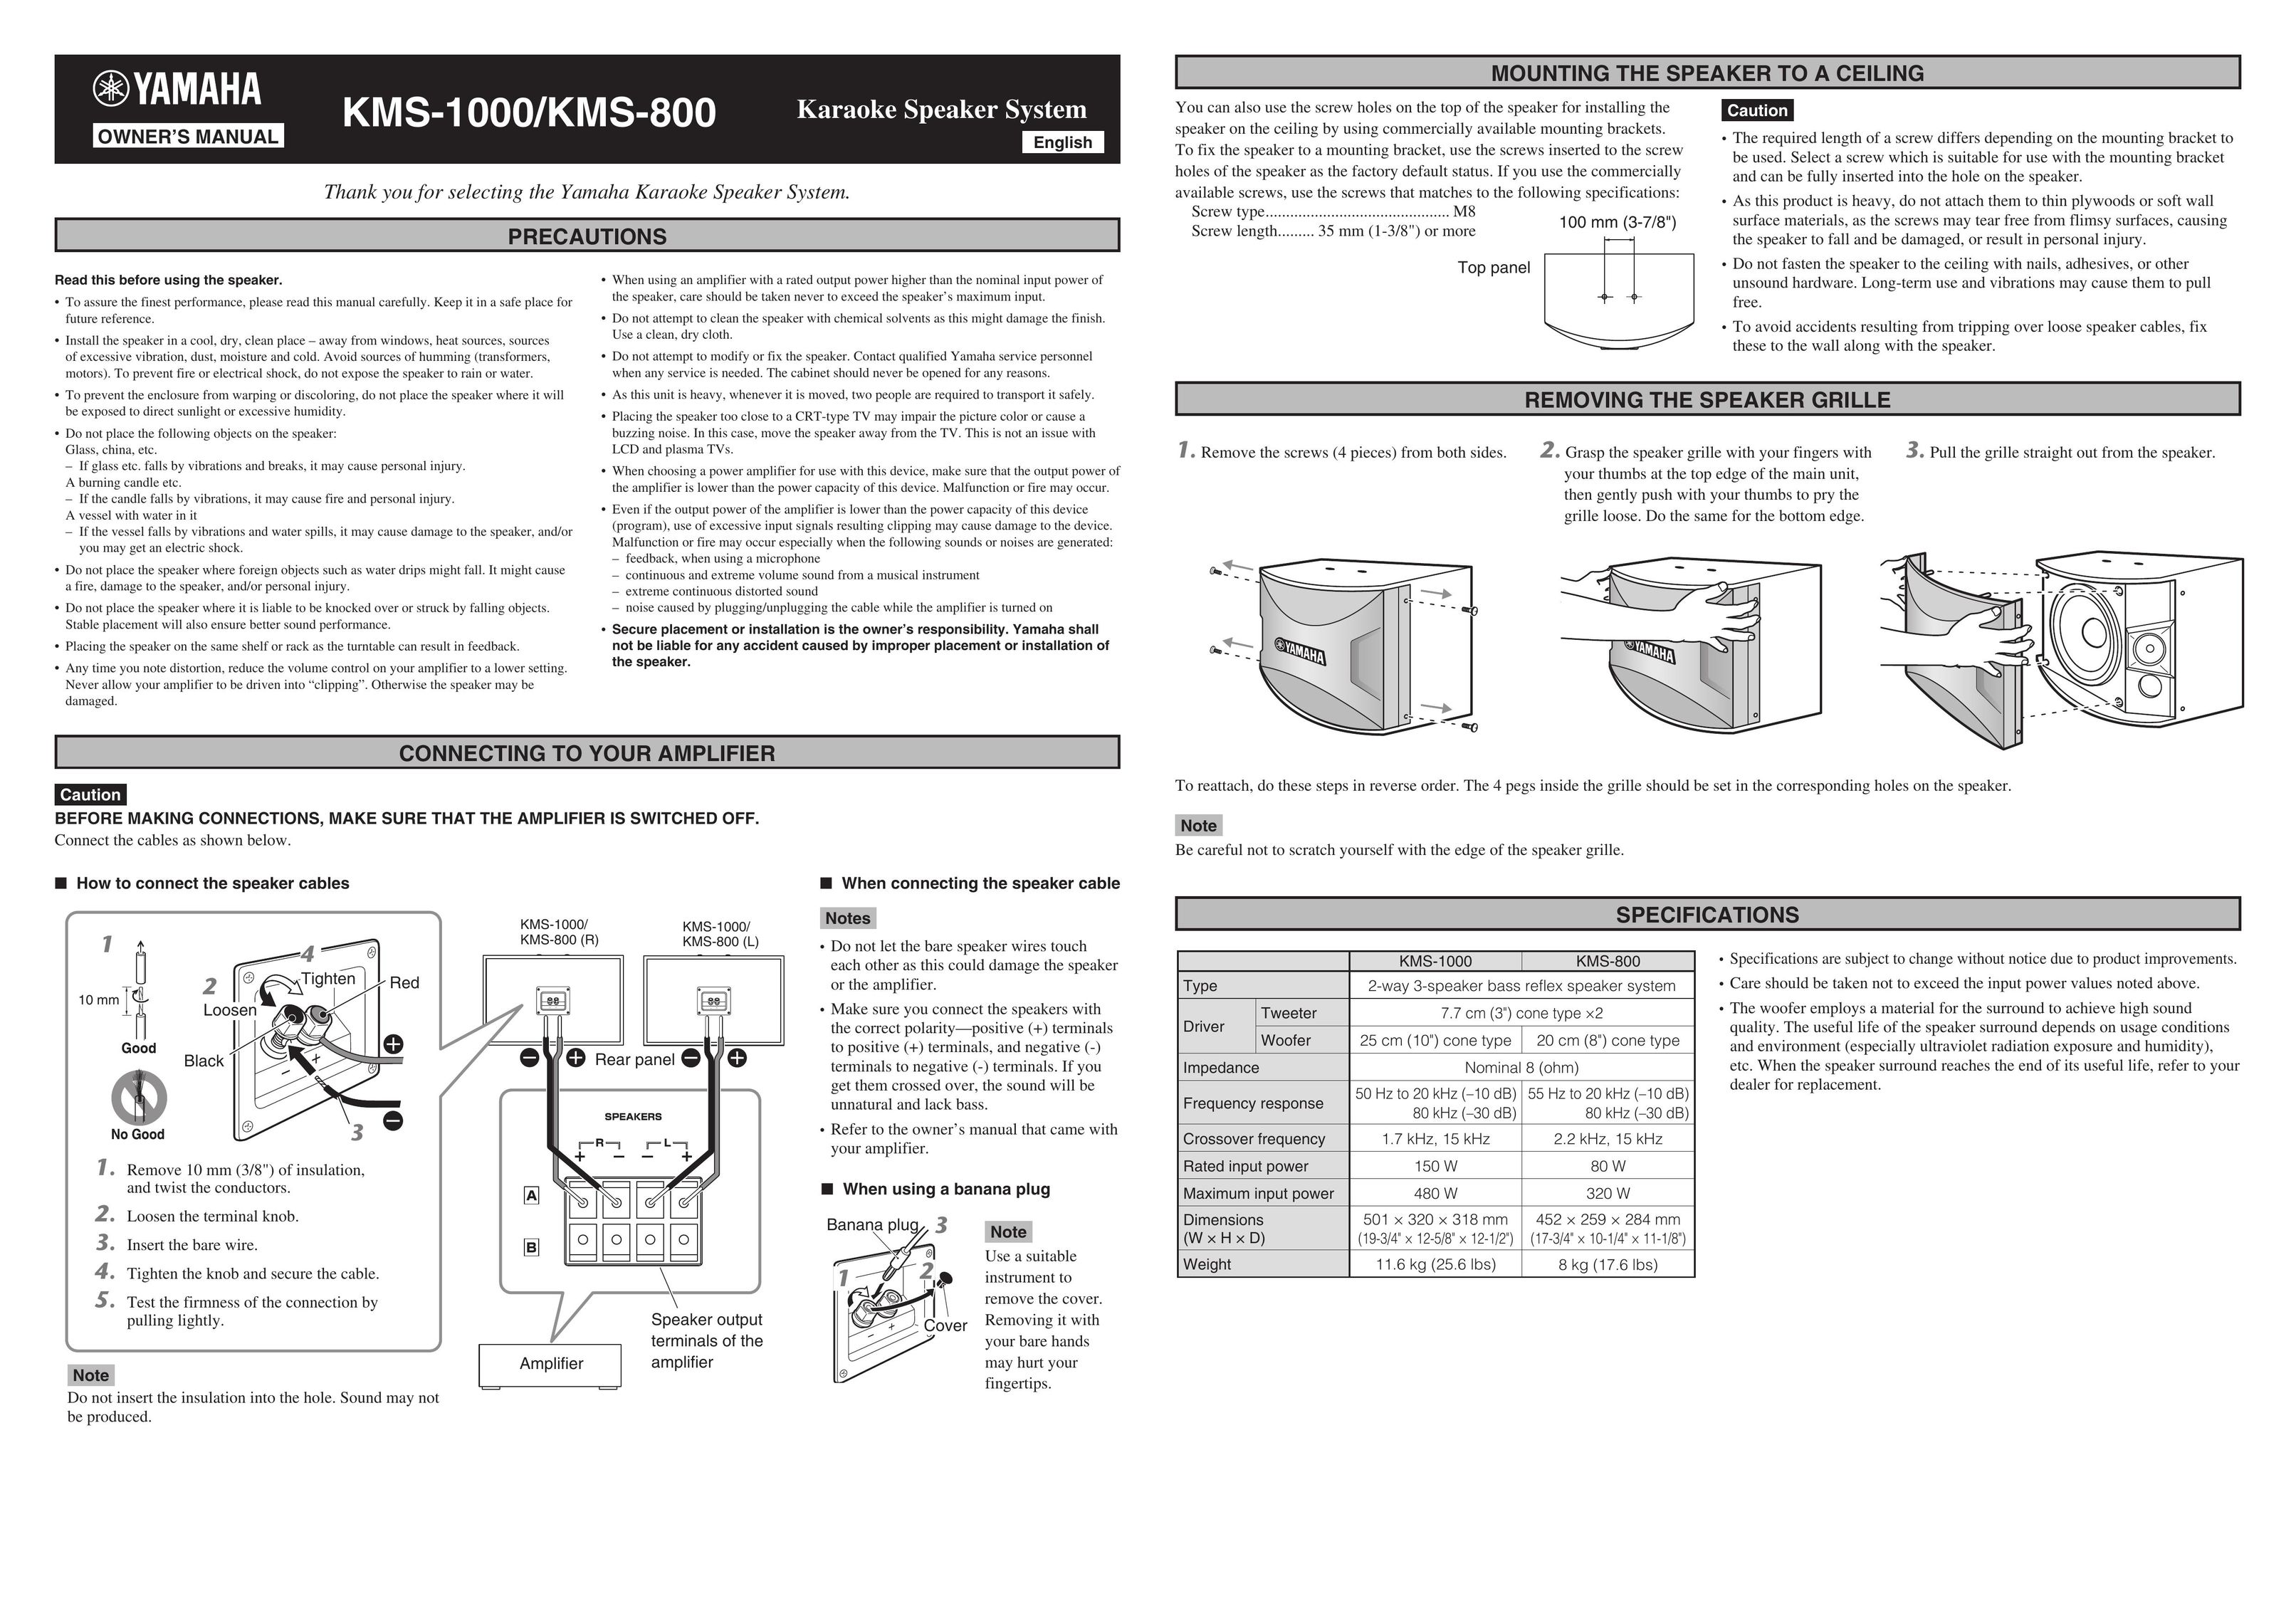 Yamaha KMS-1000 Speaker System User Manual